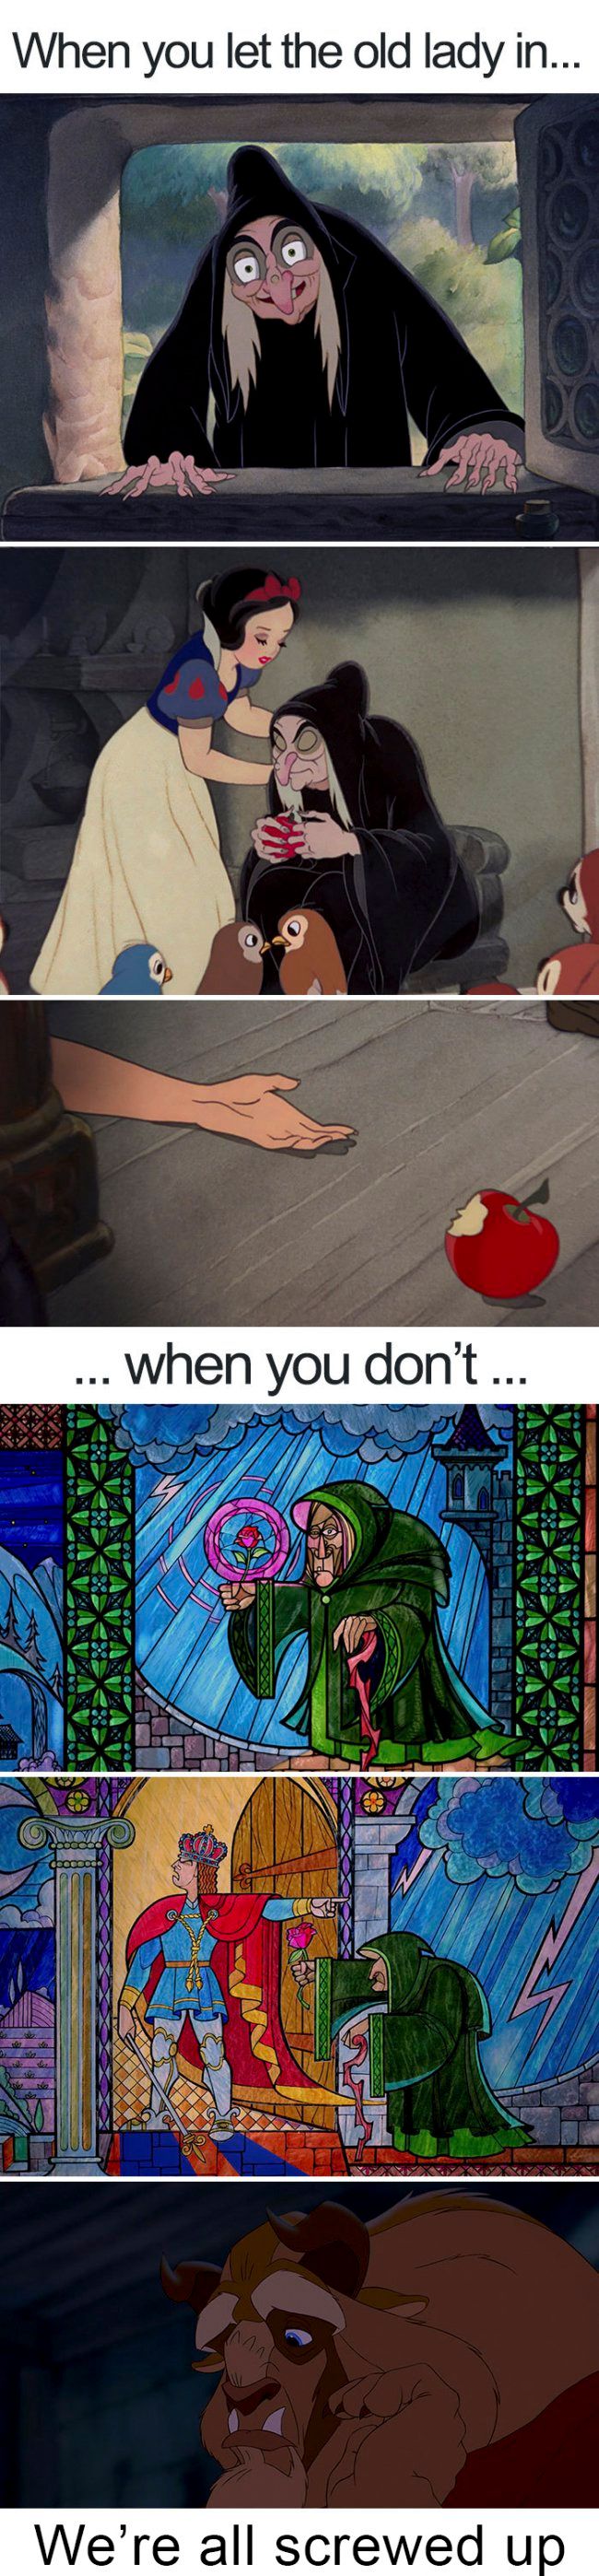 Disney Jokes (35 pics)